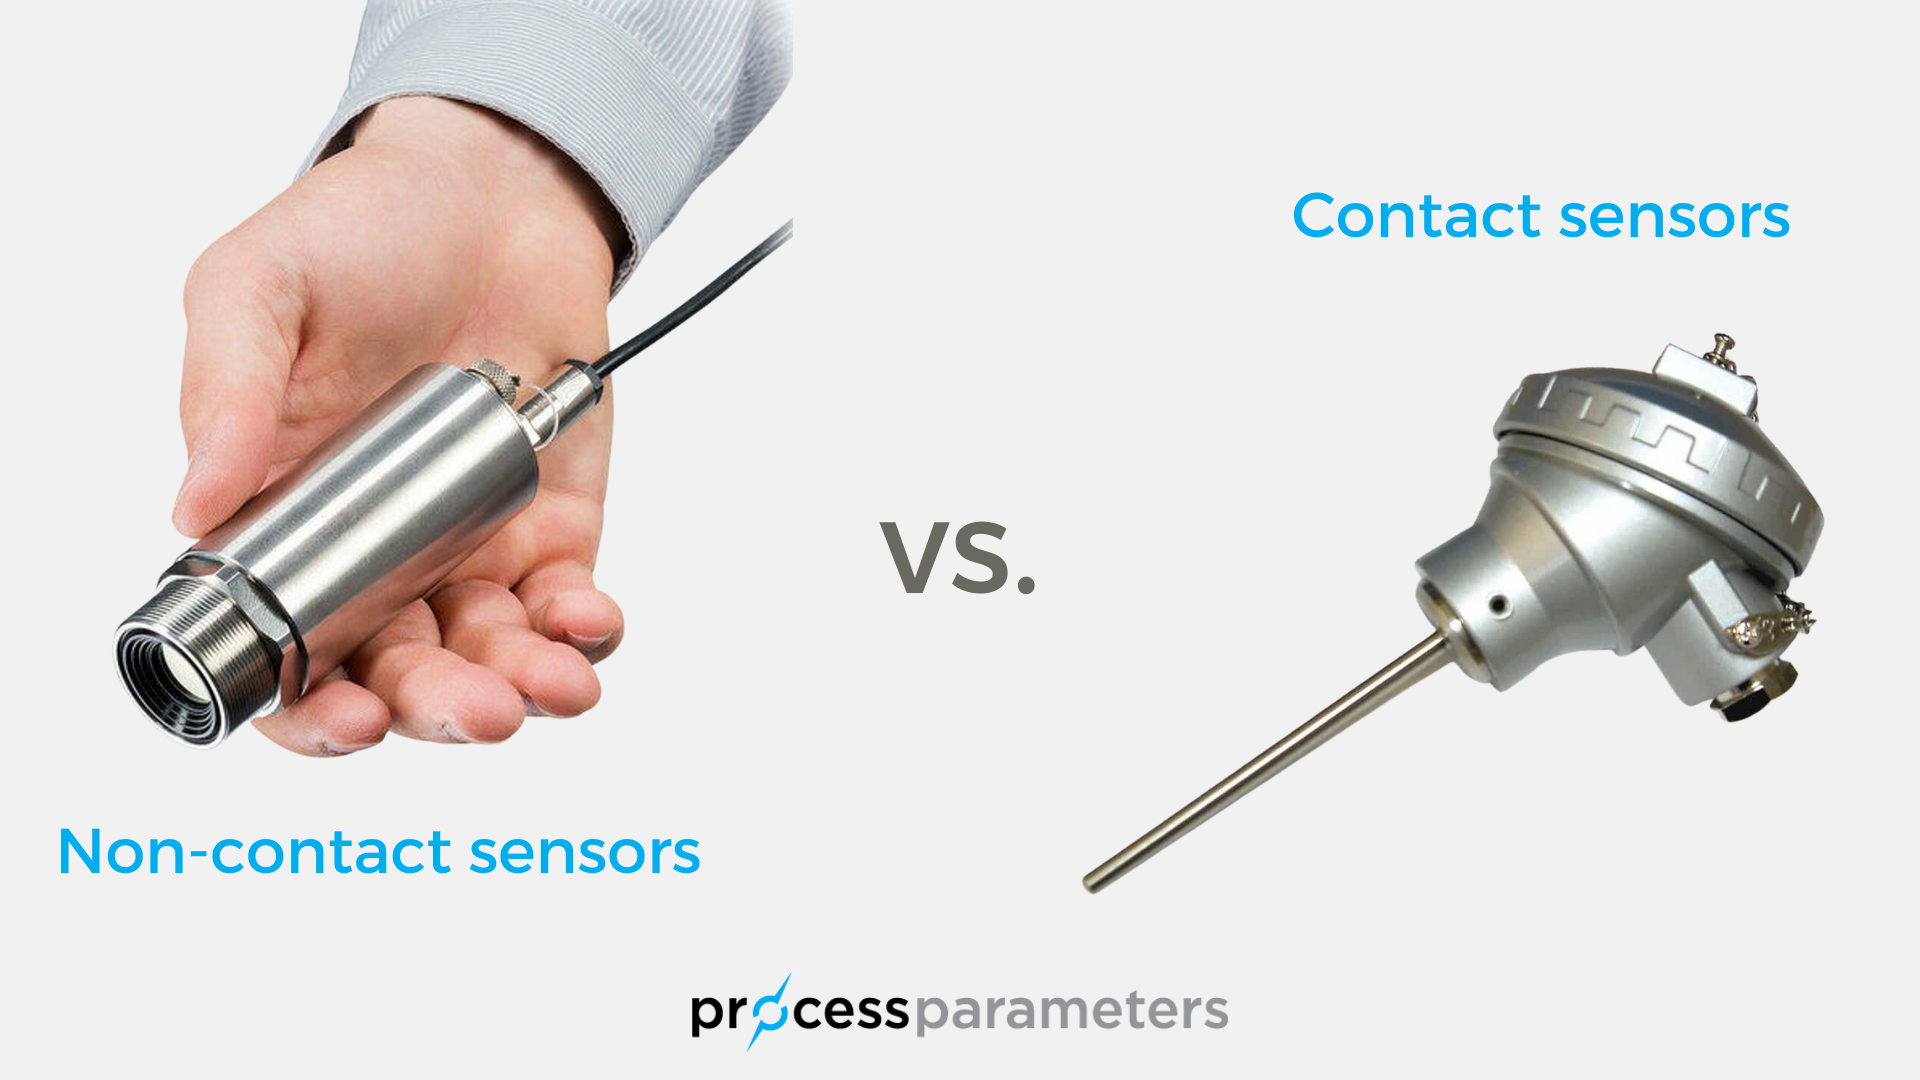 Temperature Sensors vs Temperature Transmitters? Difference?